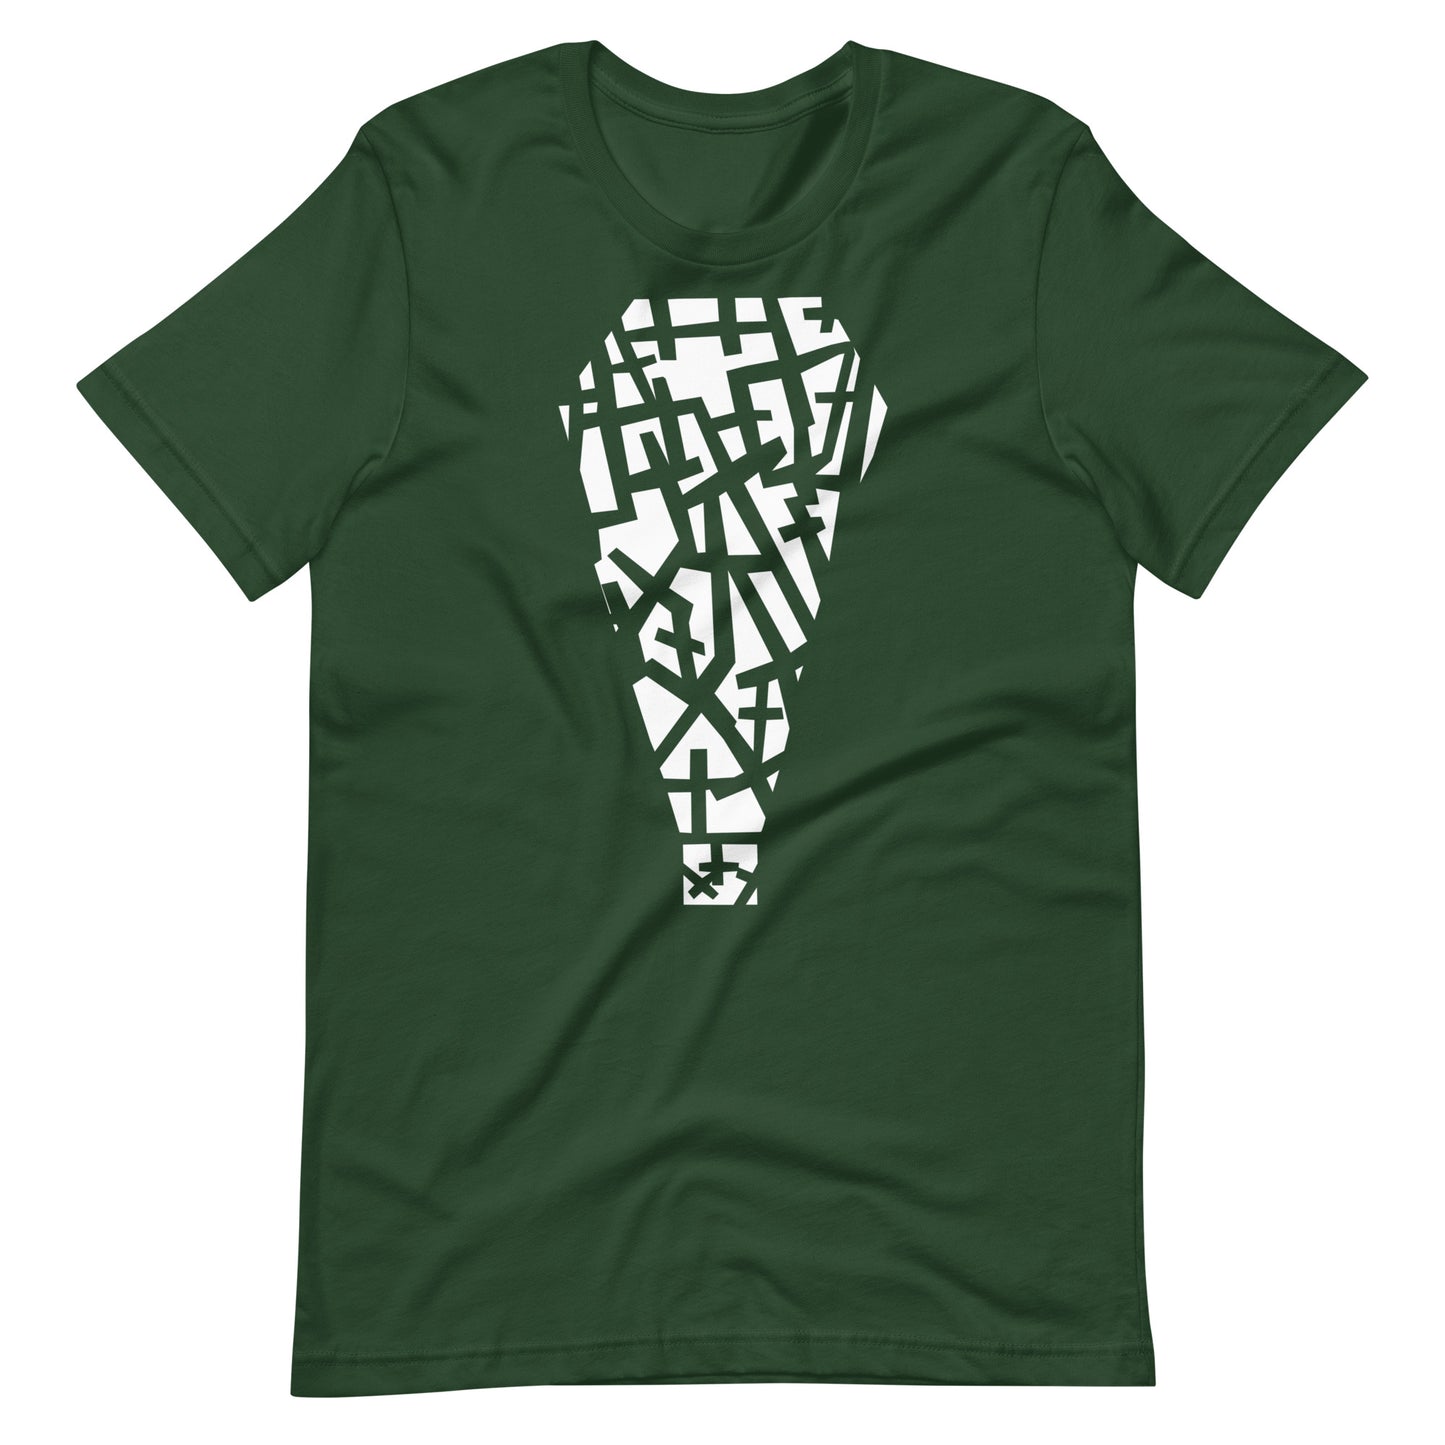 Deadty - Men's t-shirt - Forest Front